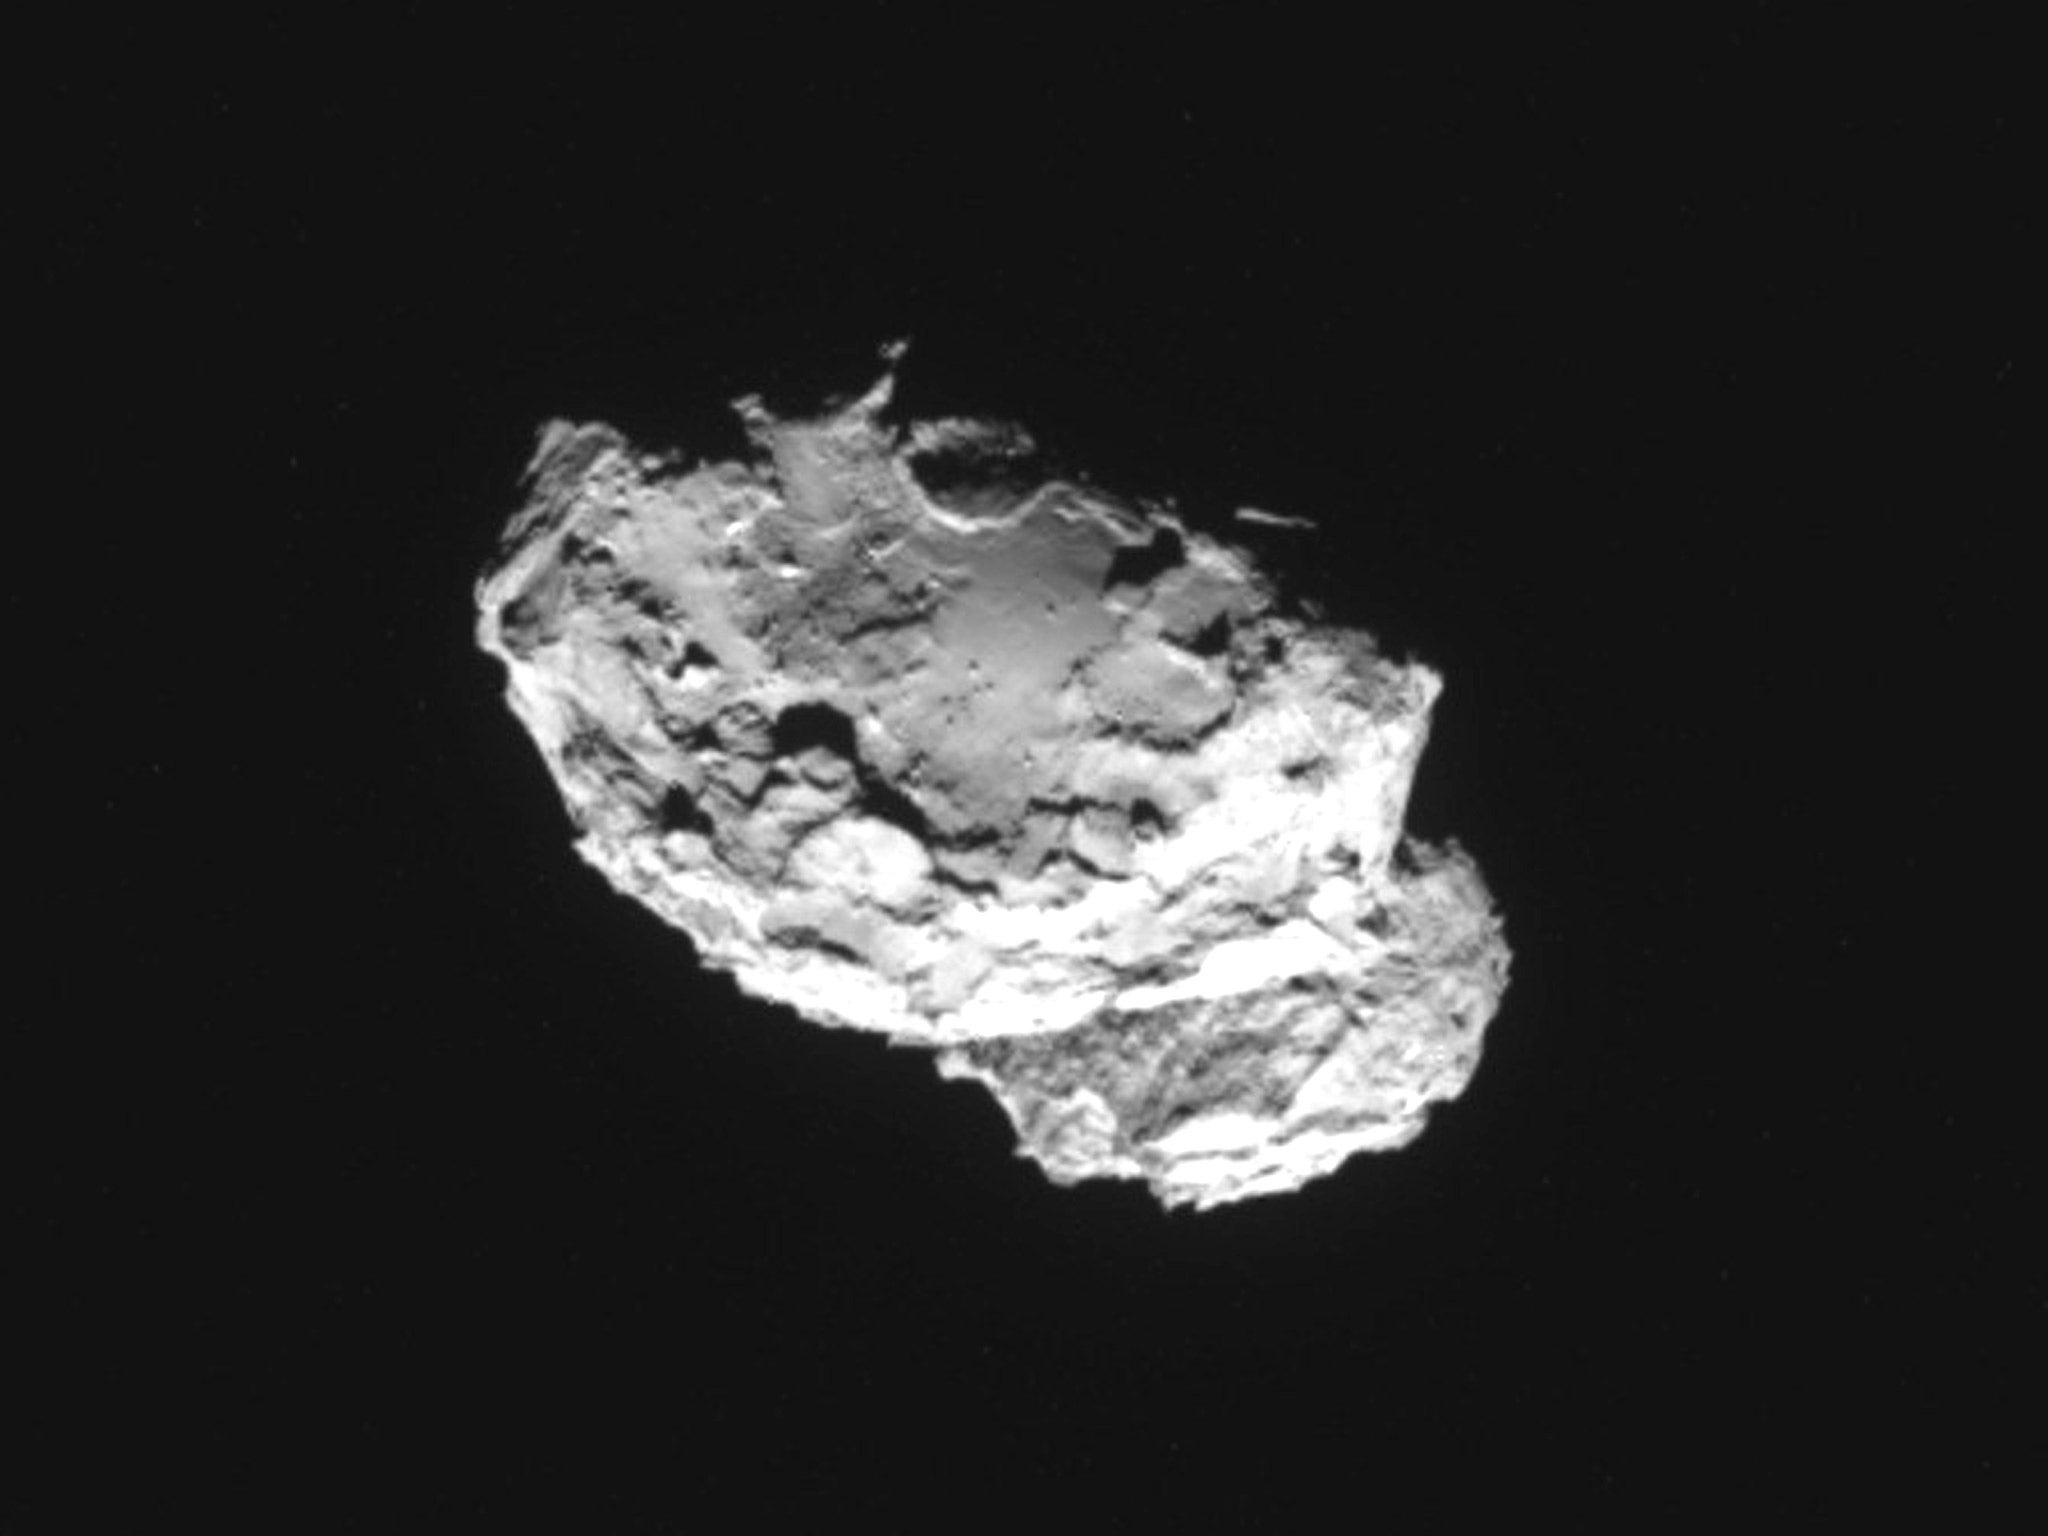 Comet 67P/Churyumov-Gerasimenko seen from a distance of 150 miles